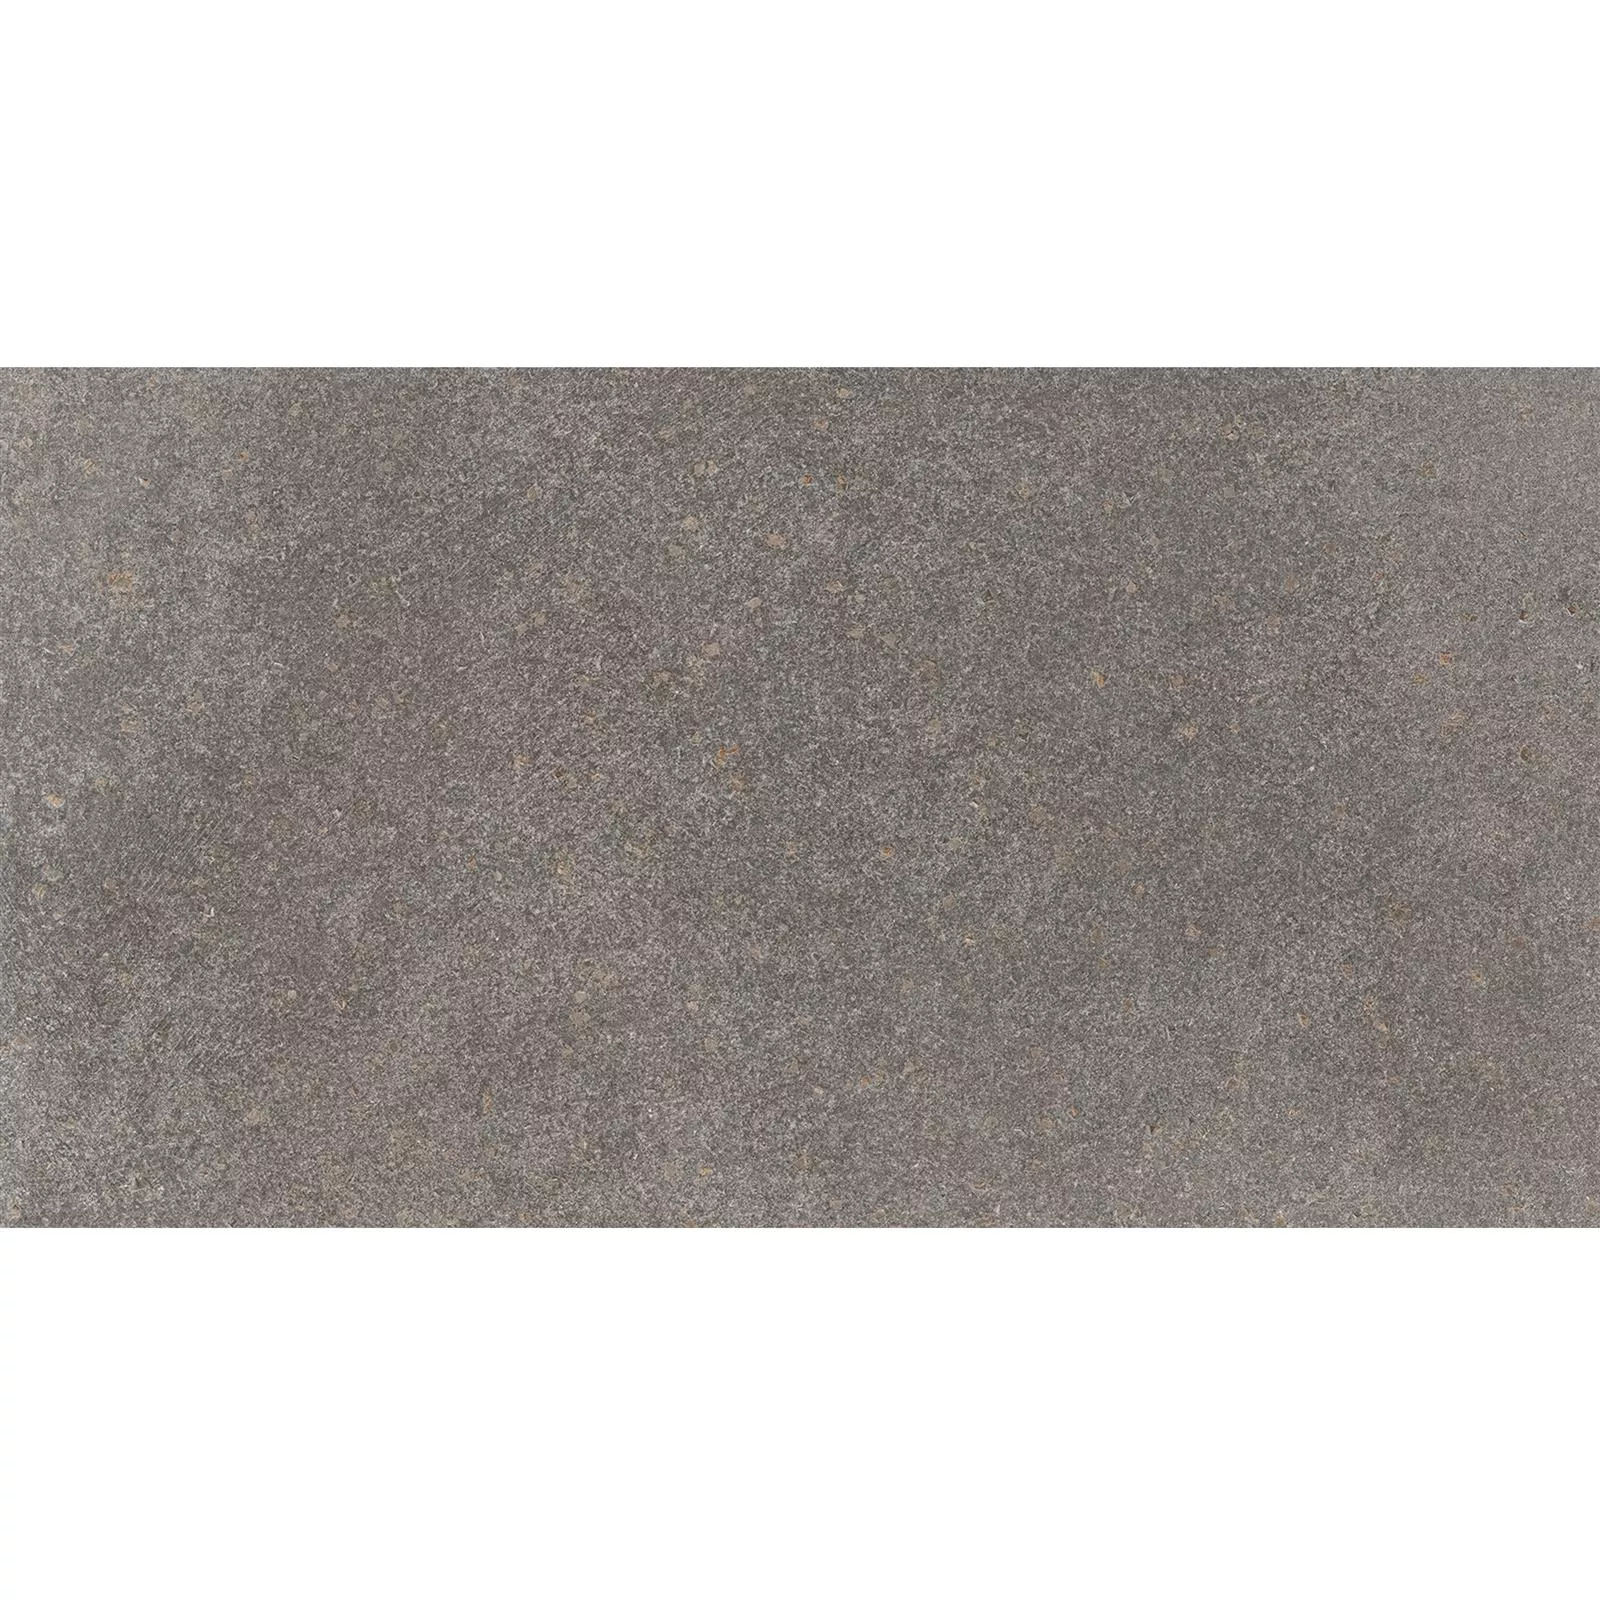 Floor Tiles Stone Optic Horizon Brown 30x60cm